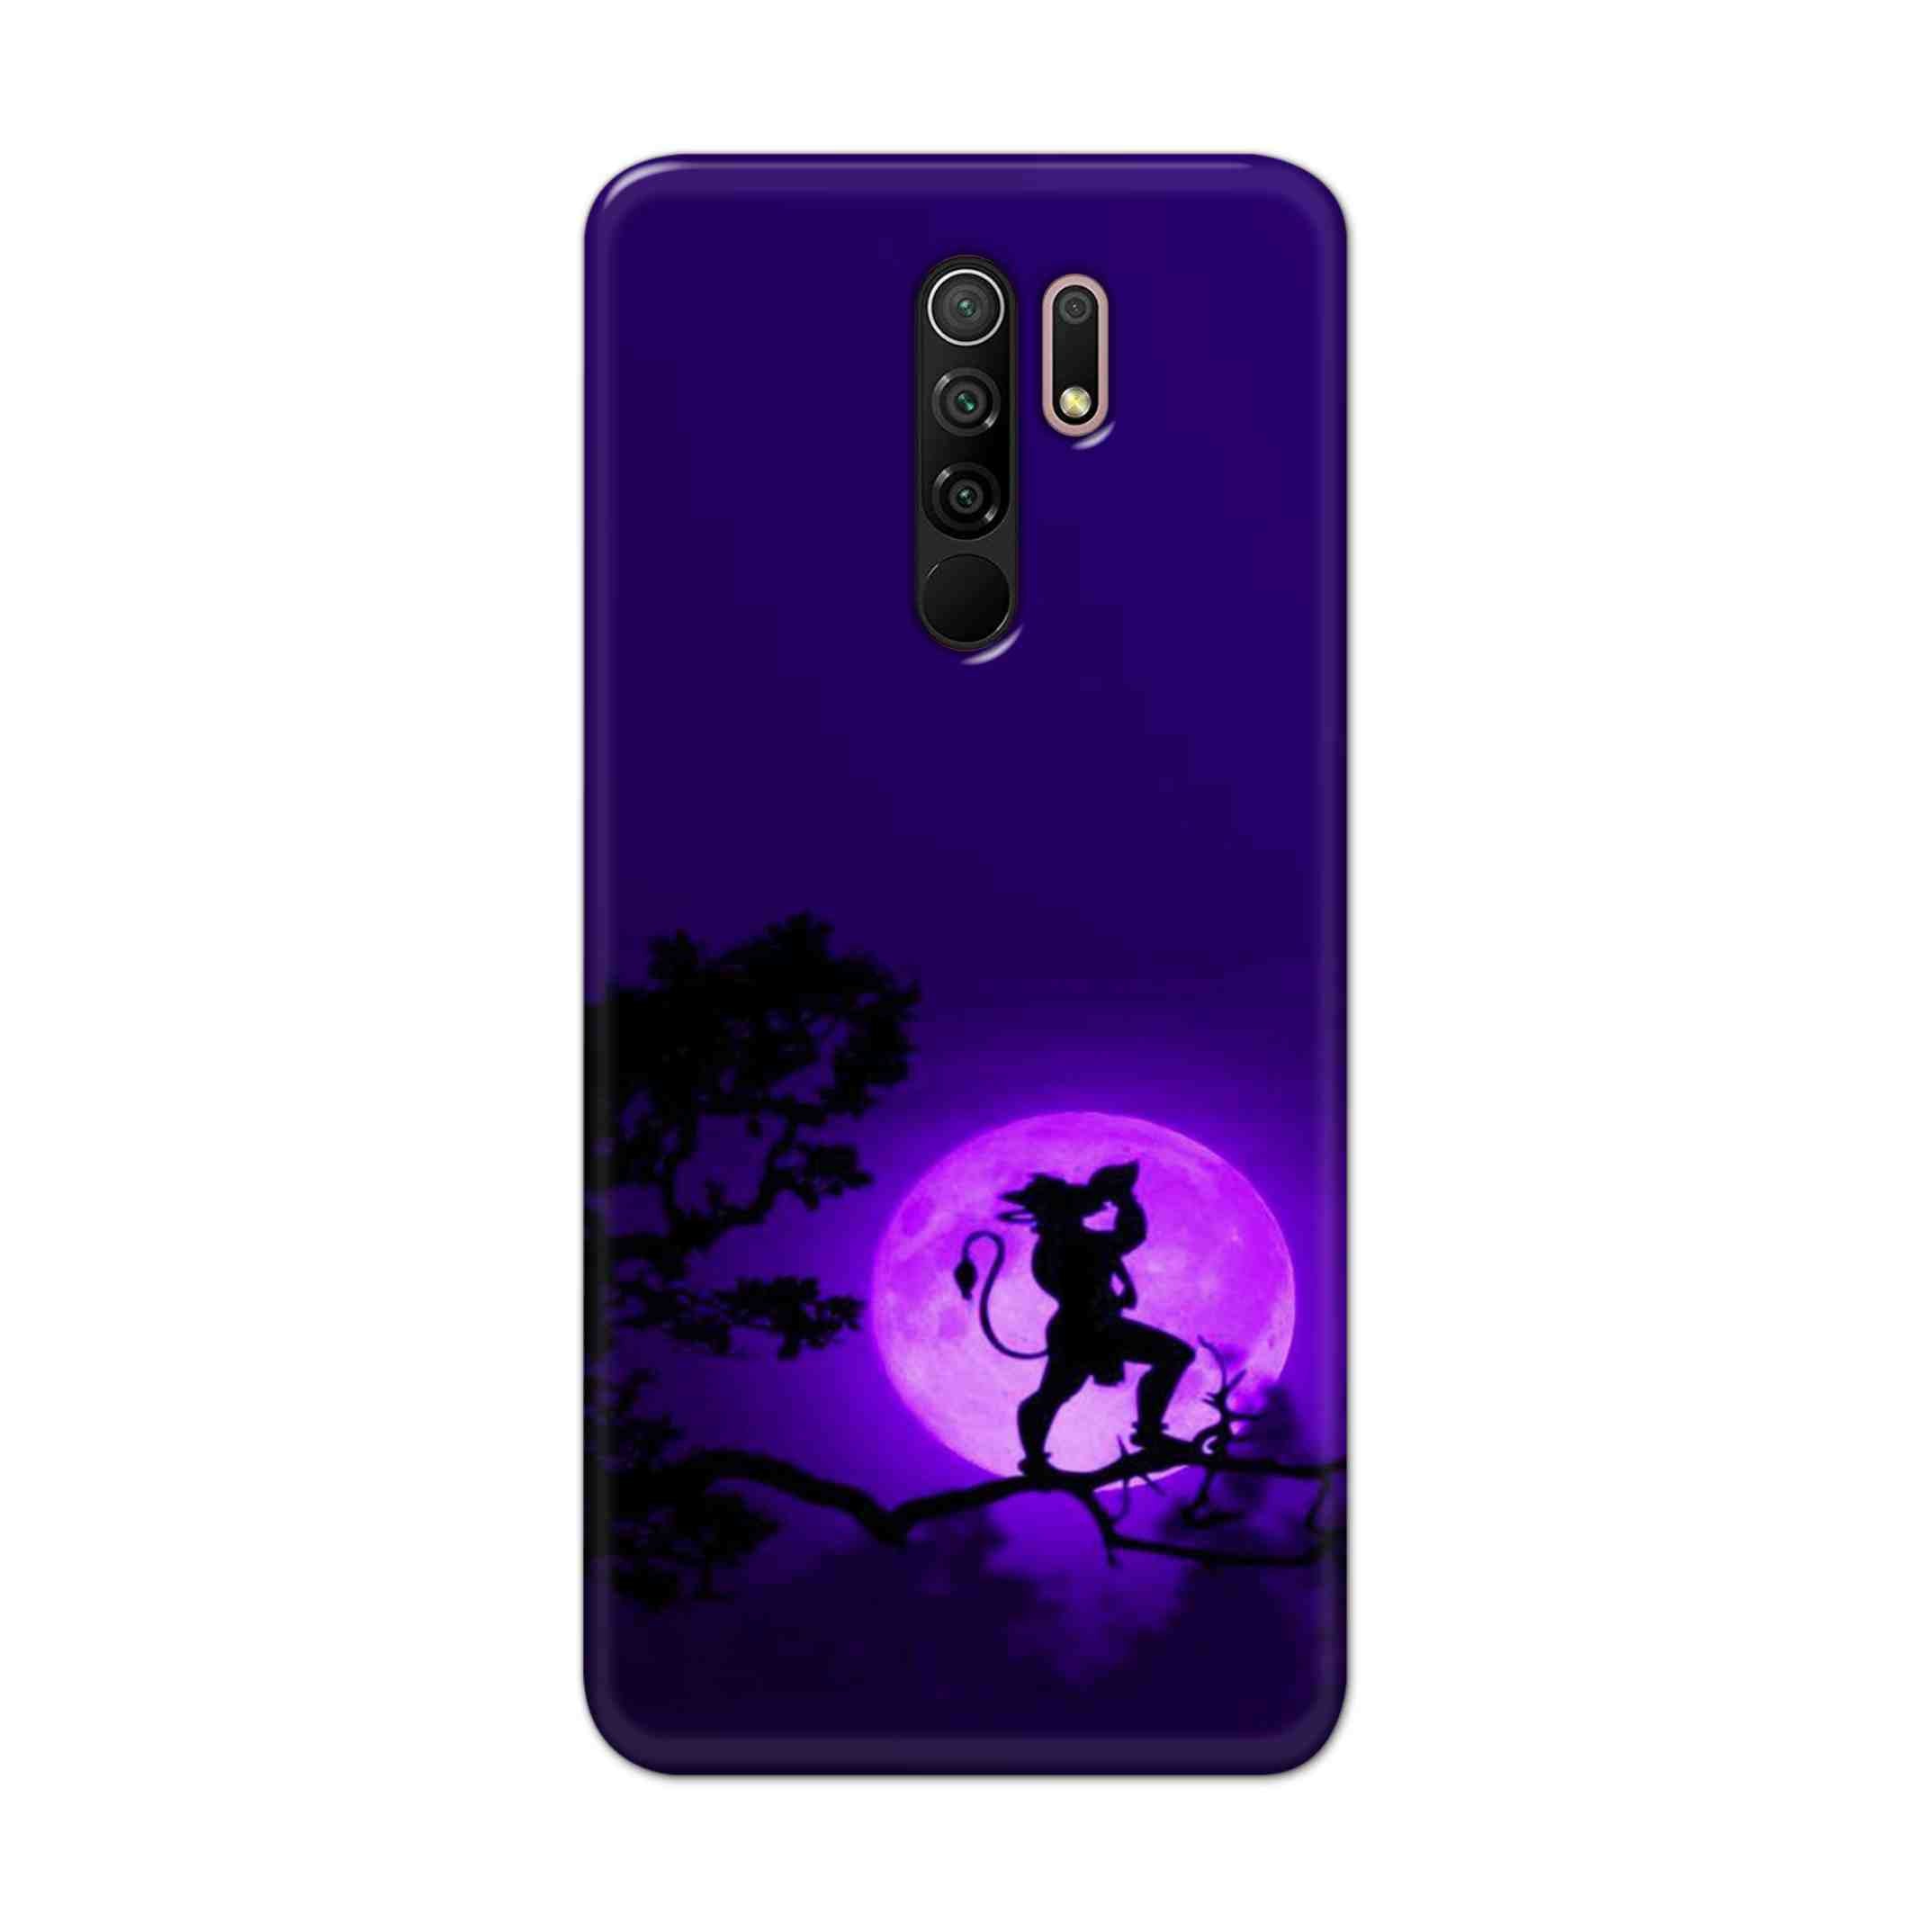 Buy Hanuman Hard Back Mobile Phone Case Cover For Xiaomi Redmi 9 Prime Online